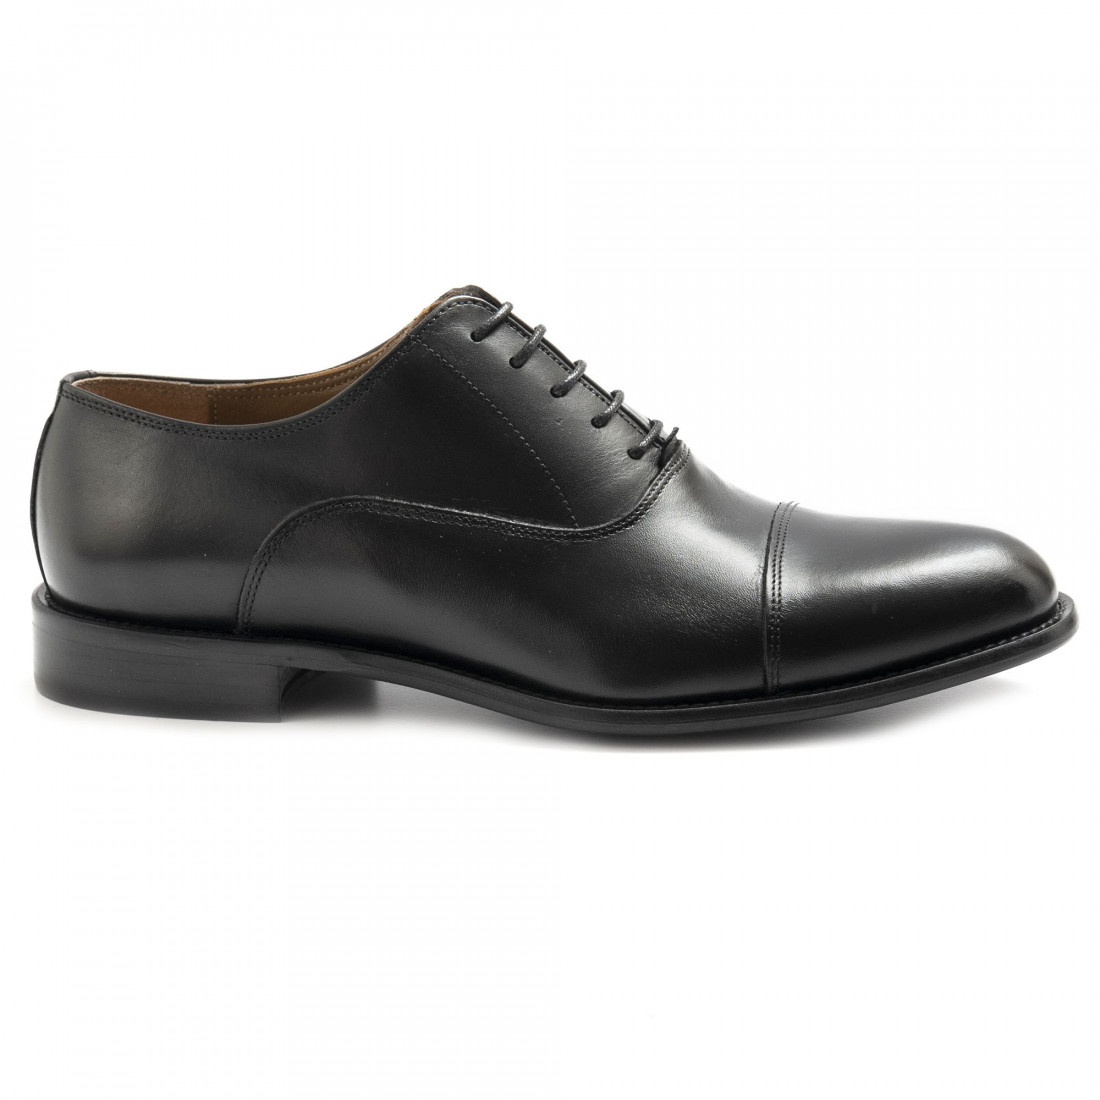 Men's Sangiorgio black leather oxford shoes